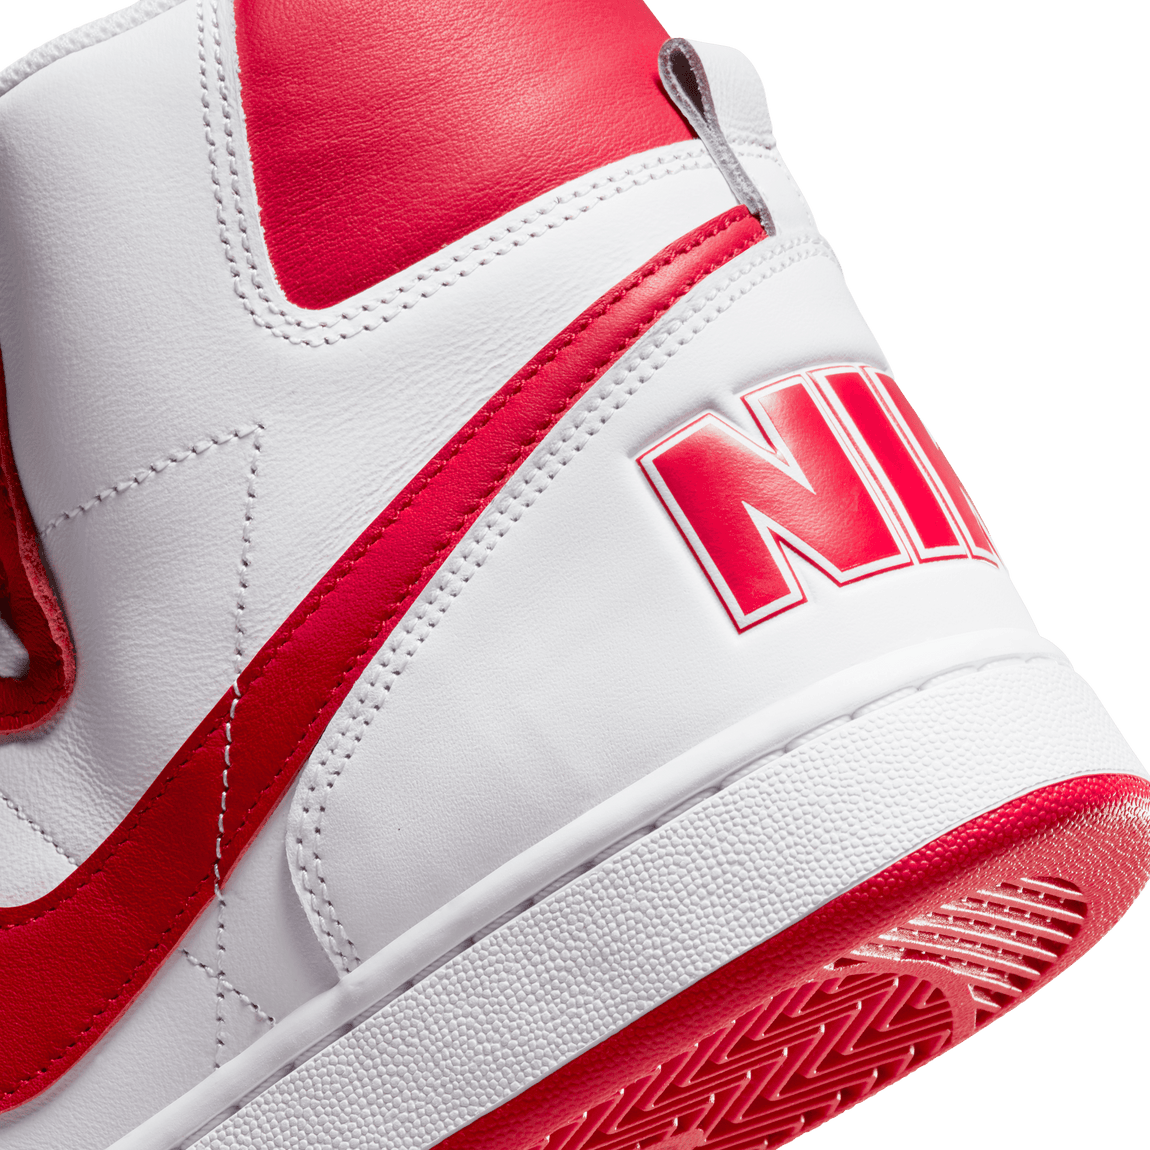 Nike Terminator High (White/University Red) 6/10 - Nike Terminator High (White/University Red) 6/10 - 